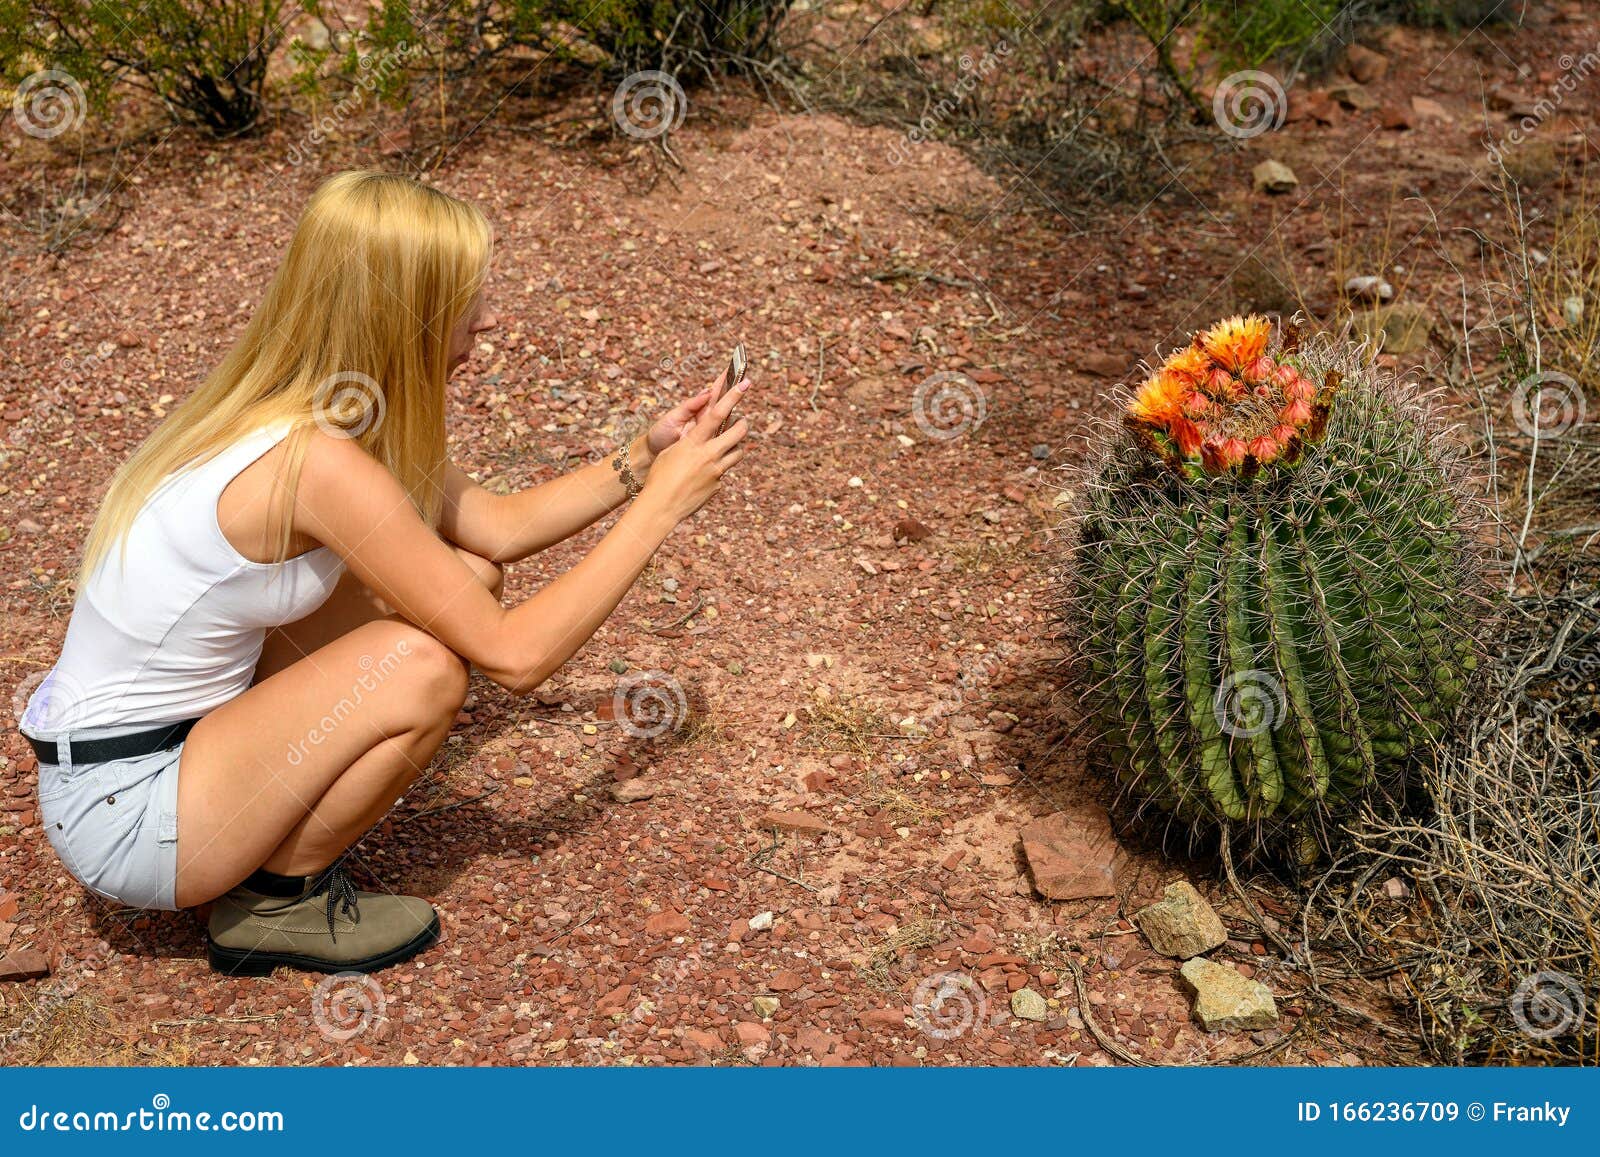 female nature photographer taking photos of the saguaro cactus carnegiea gigantea in saguaro national park, arizona